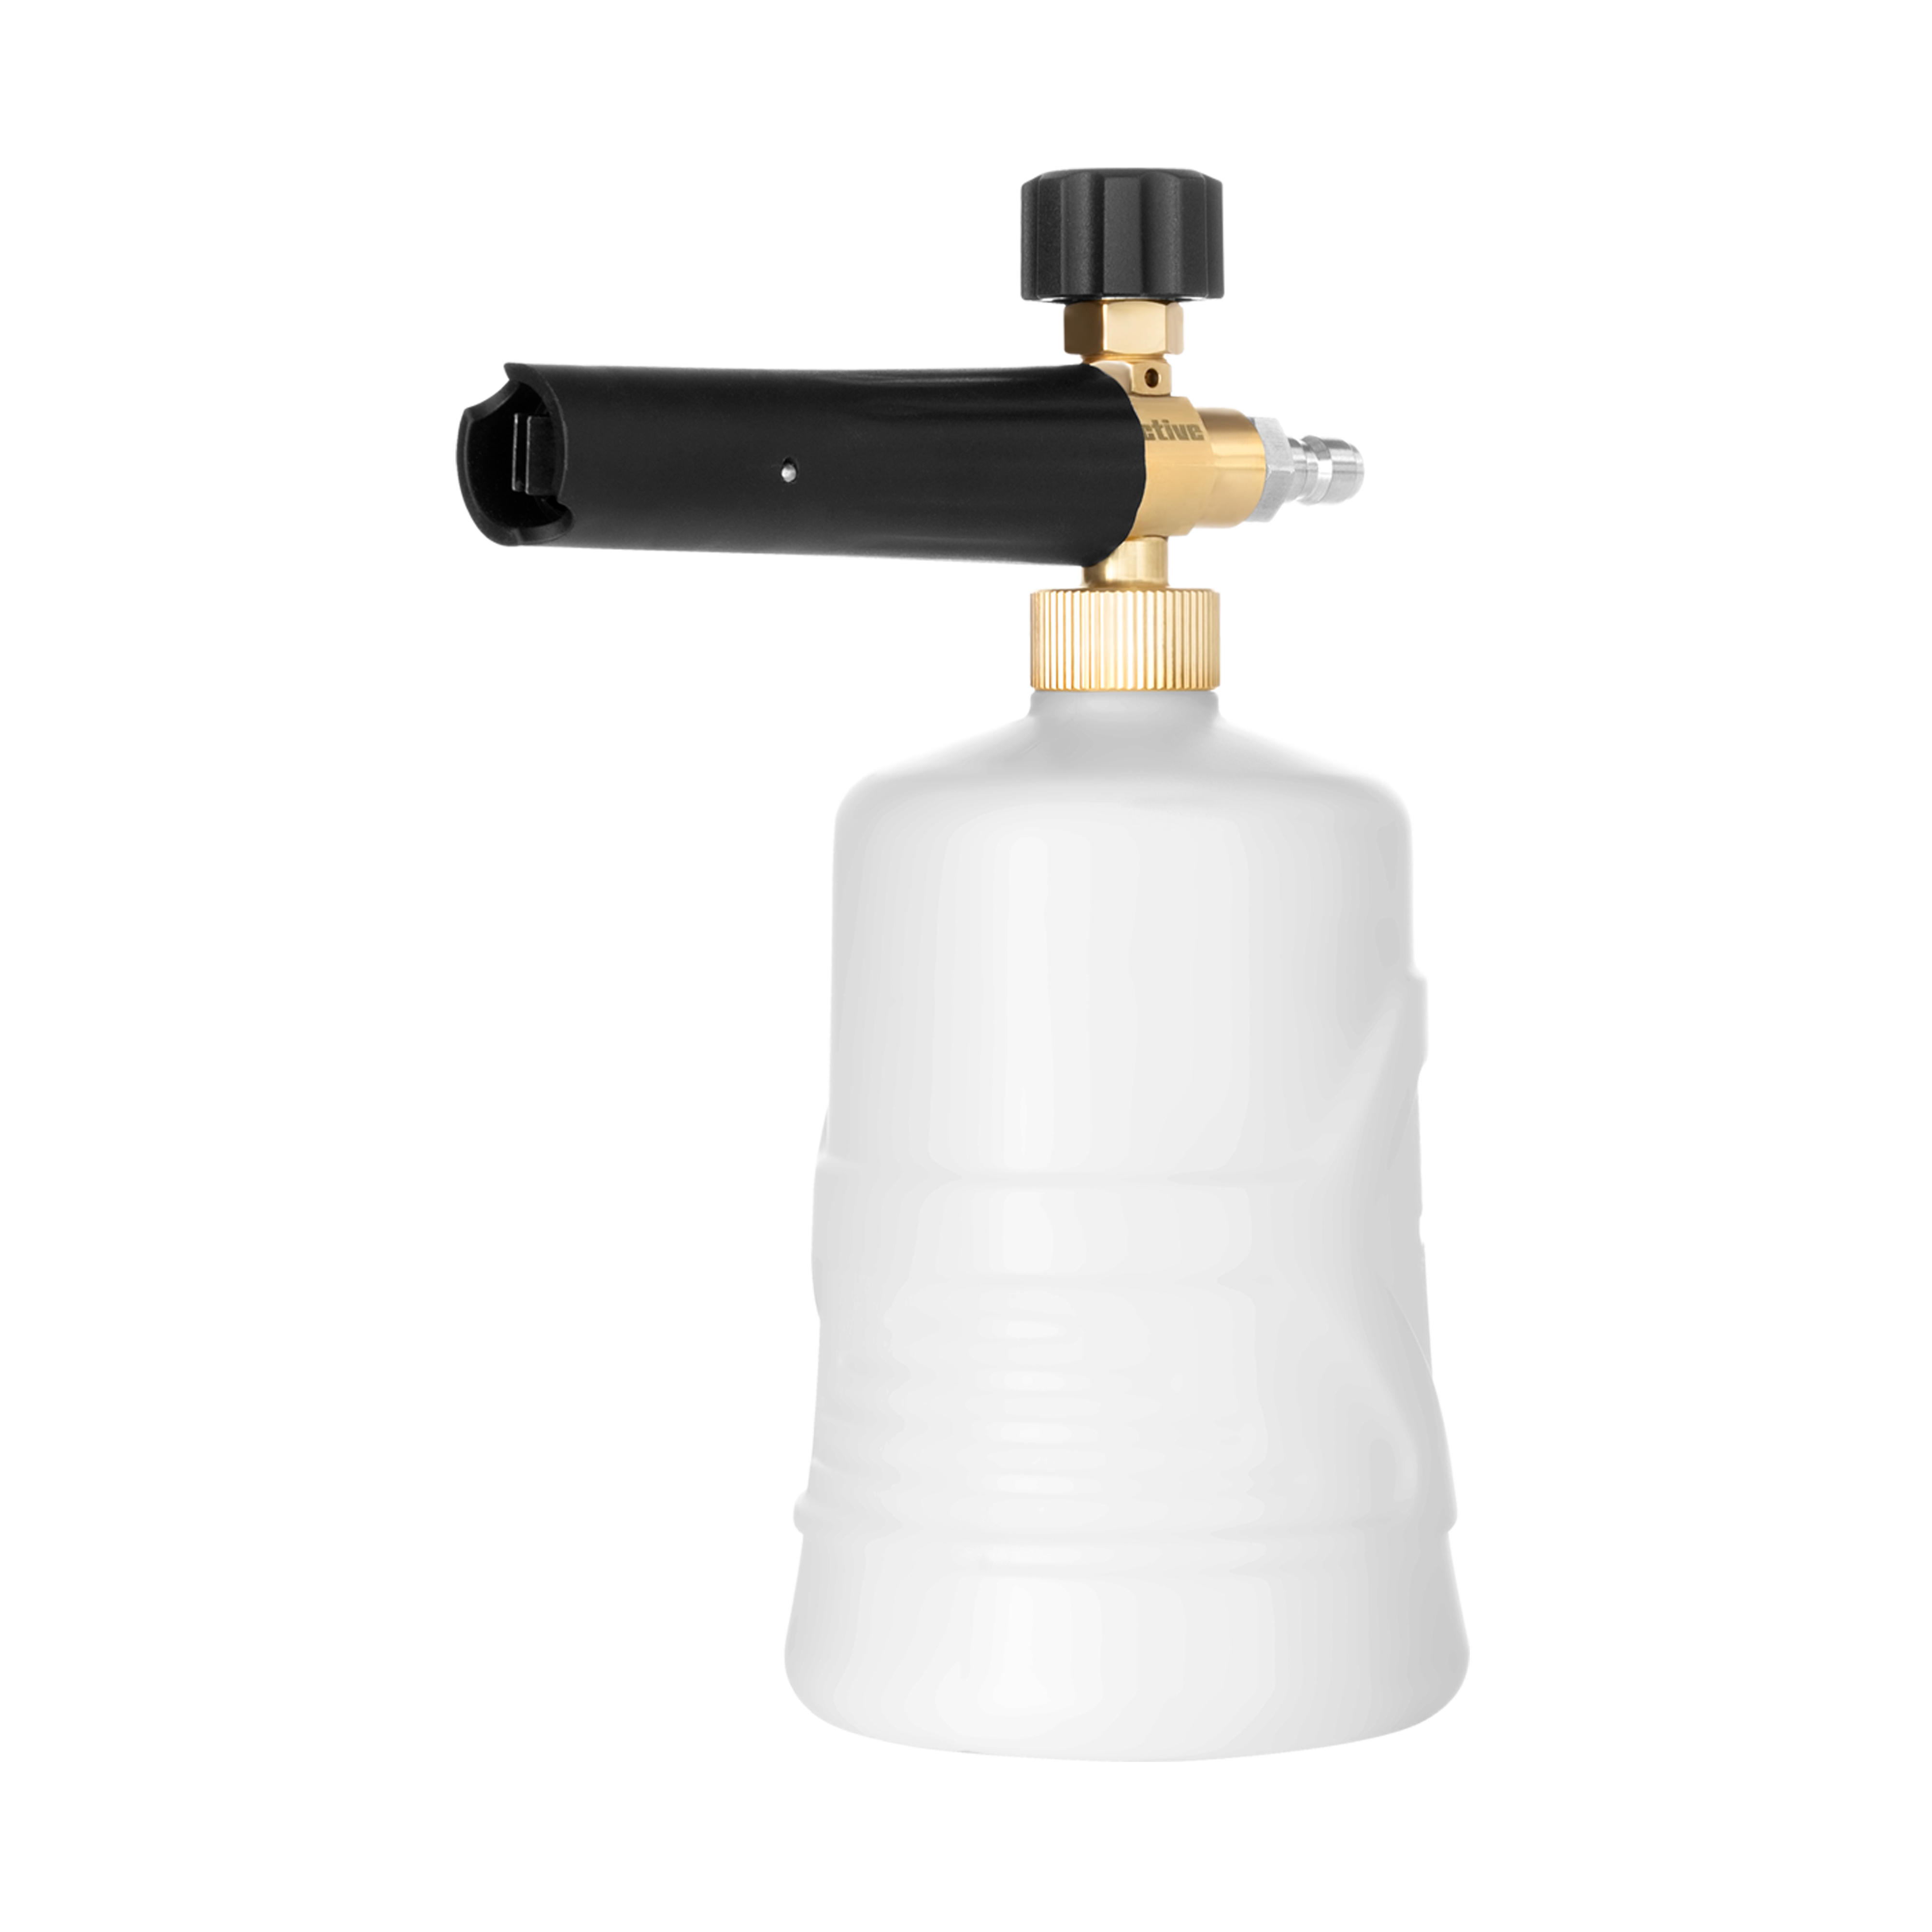 DIY Foam Sprayer at Home  How to make a pump sprayer foam 